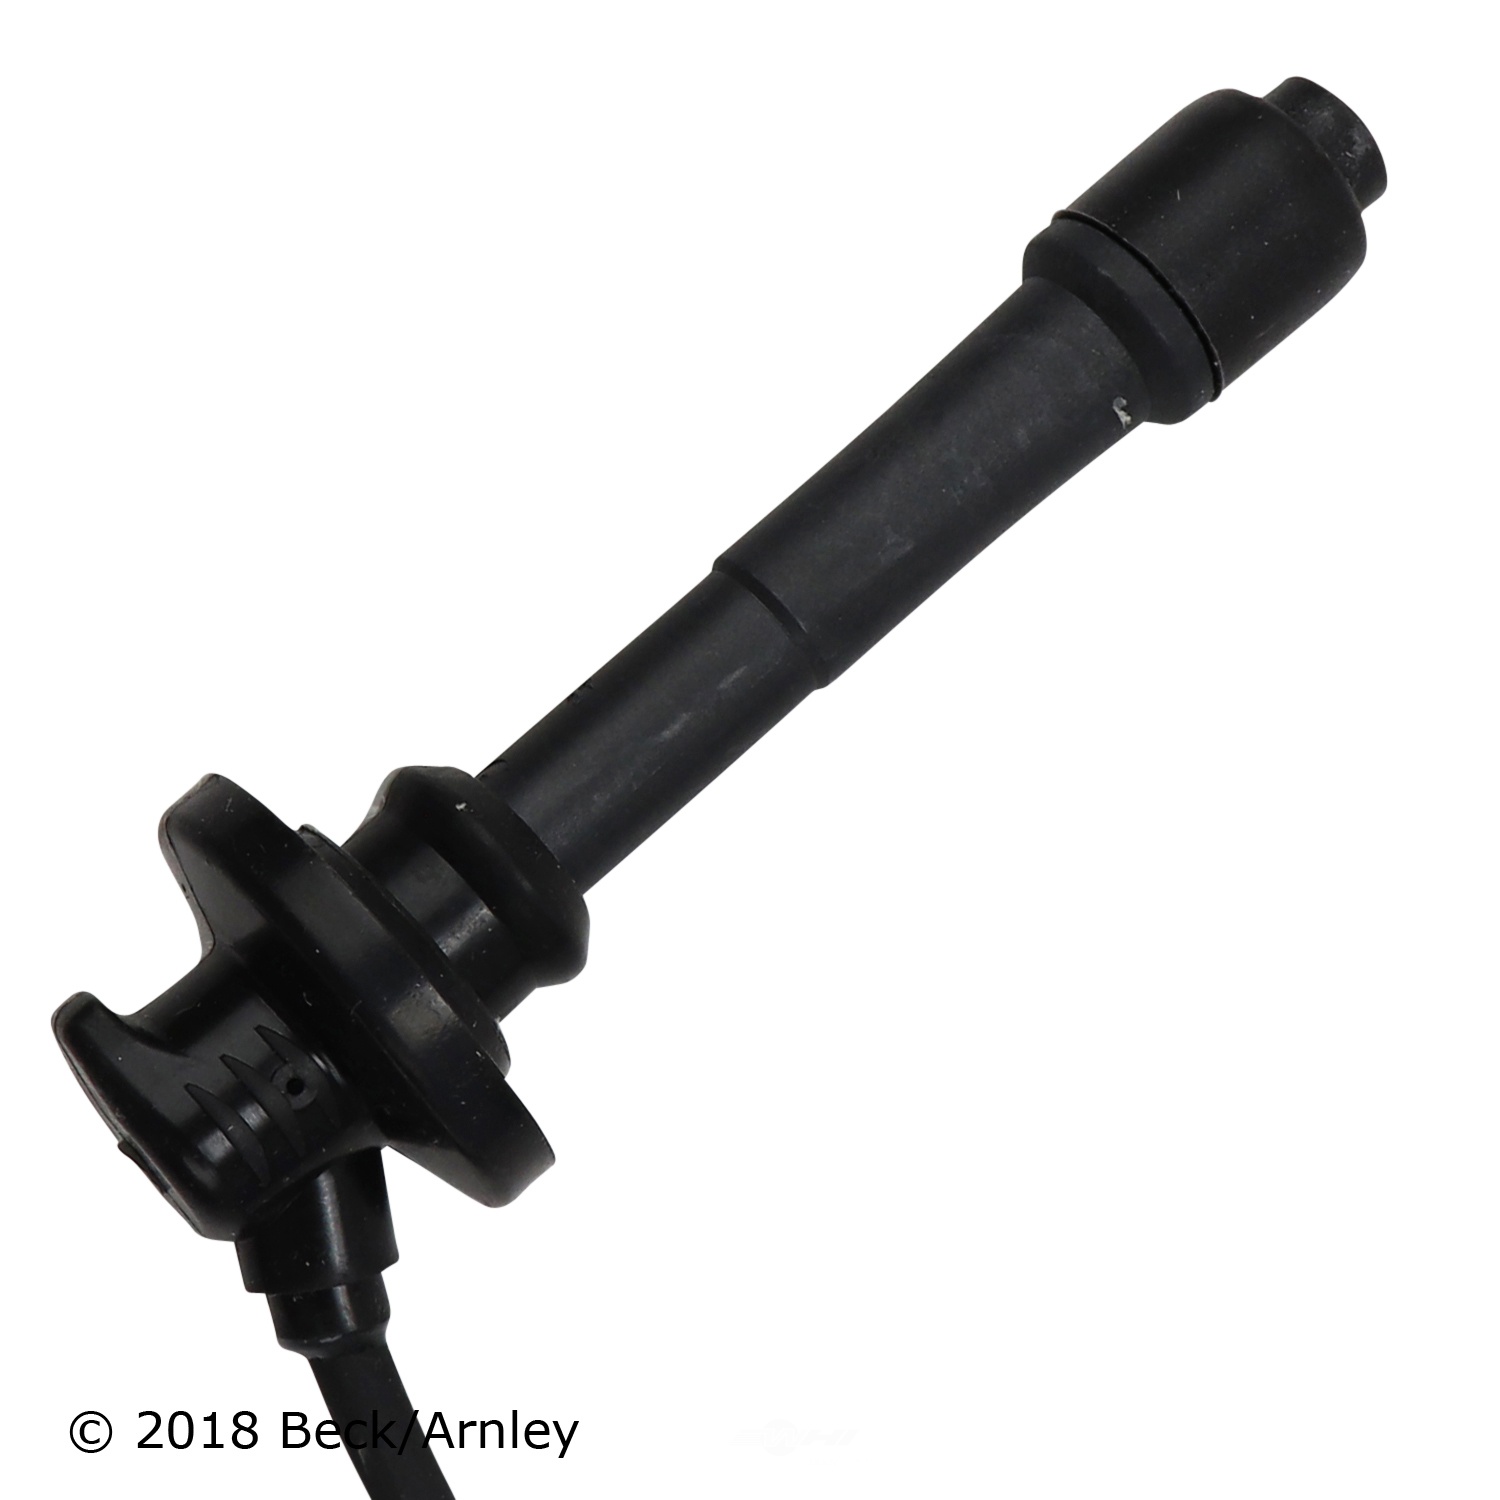 BECK/ARNLEY - Distributor Cap / Spark Plug Wire Kit - BAR 174-6962